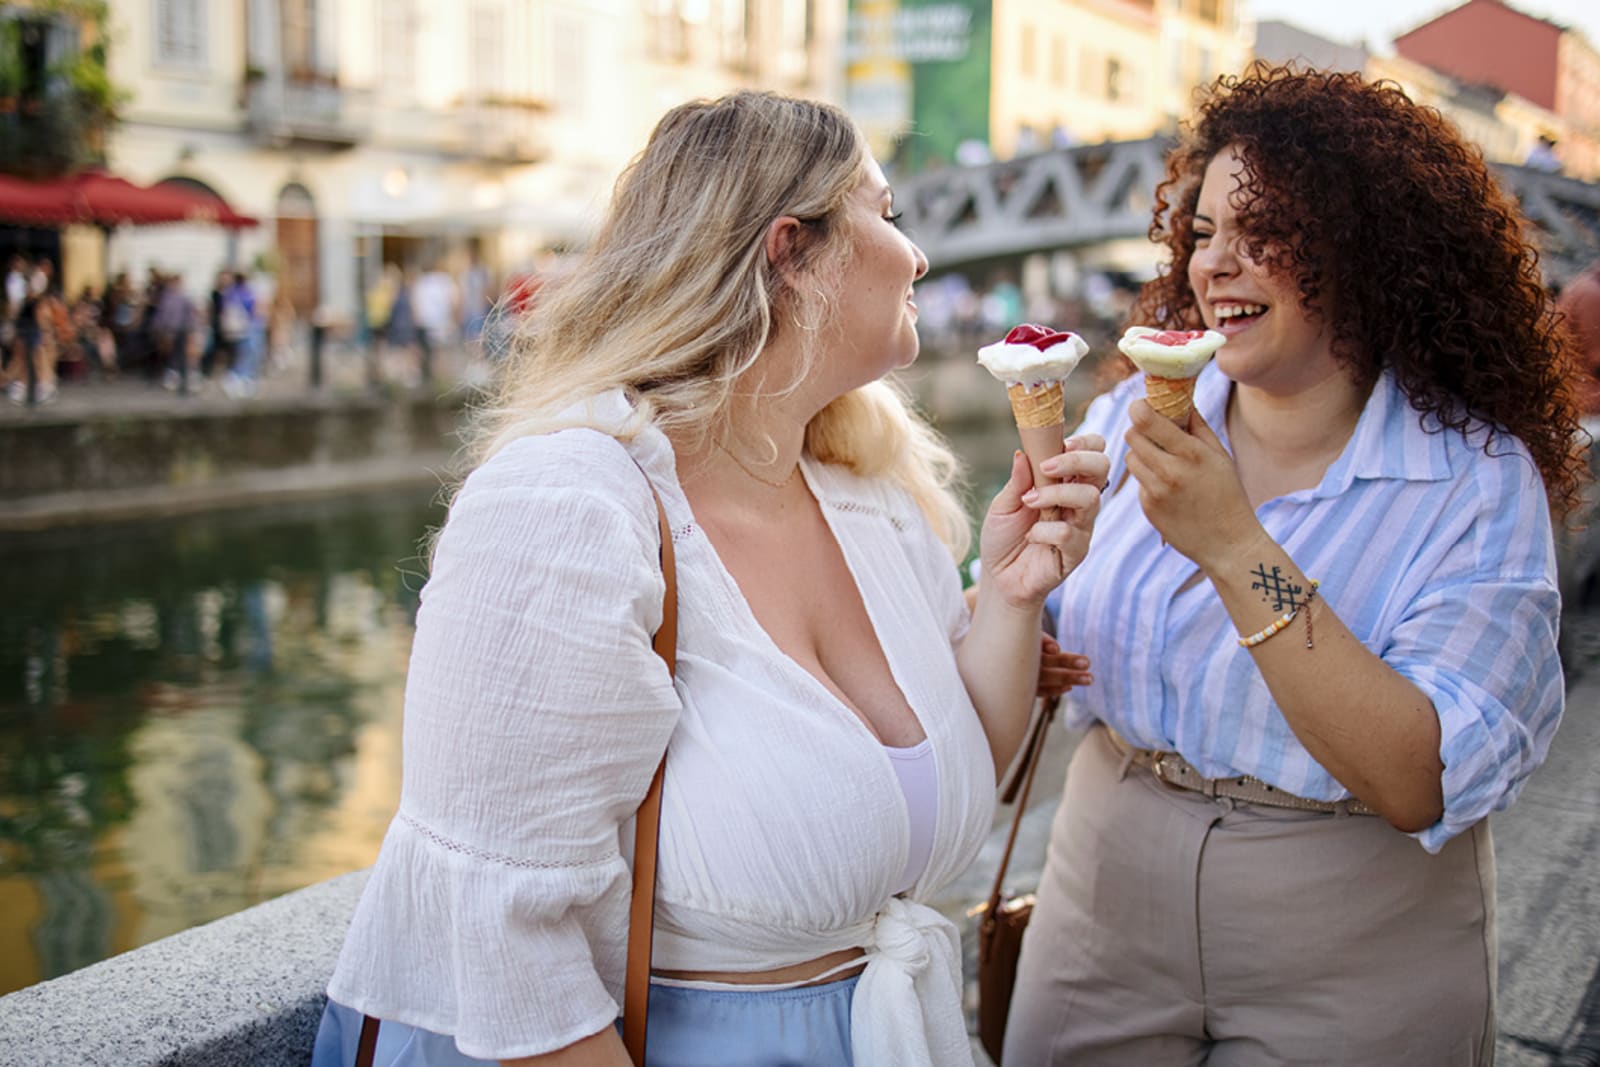 Two women eating gelato in Italy